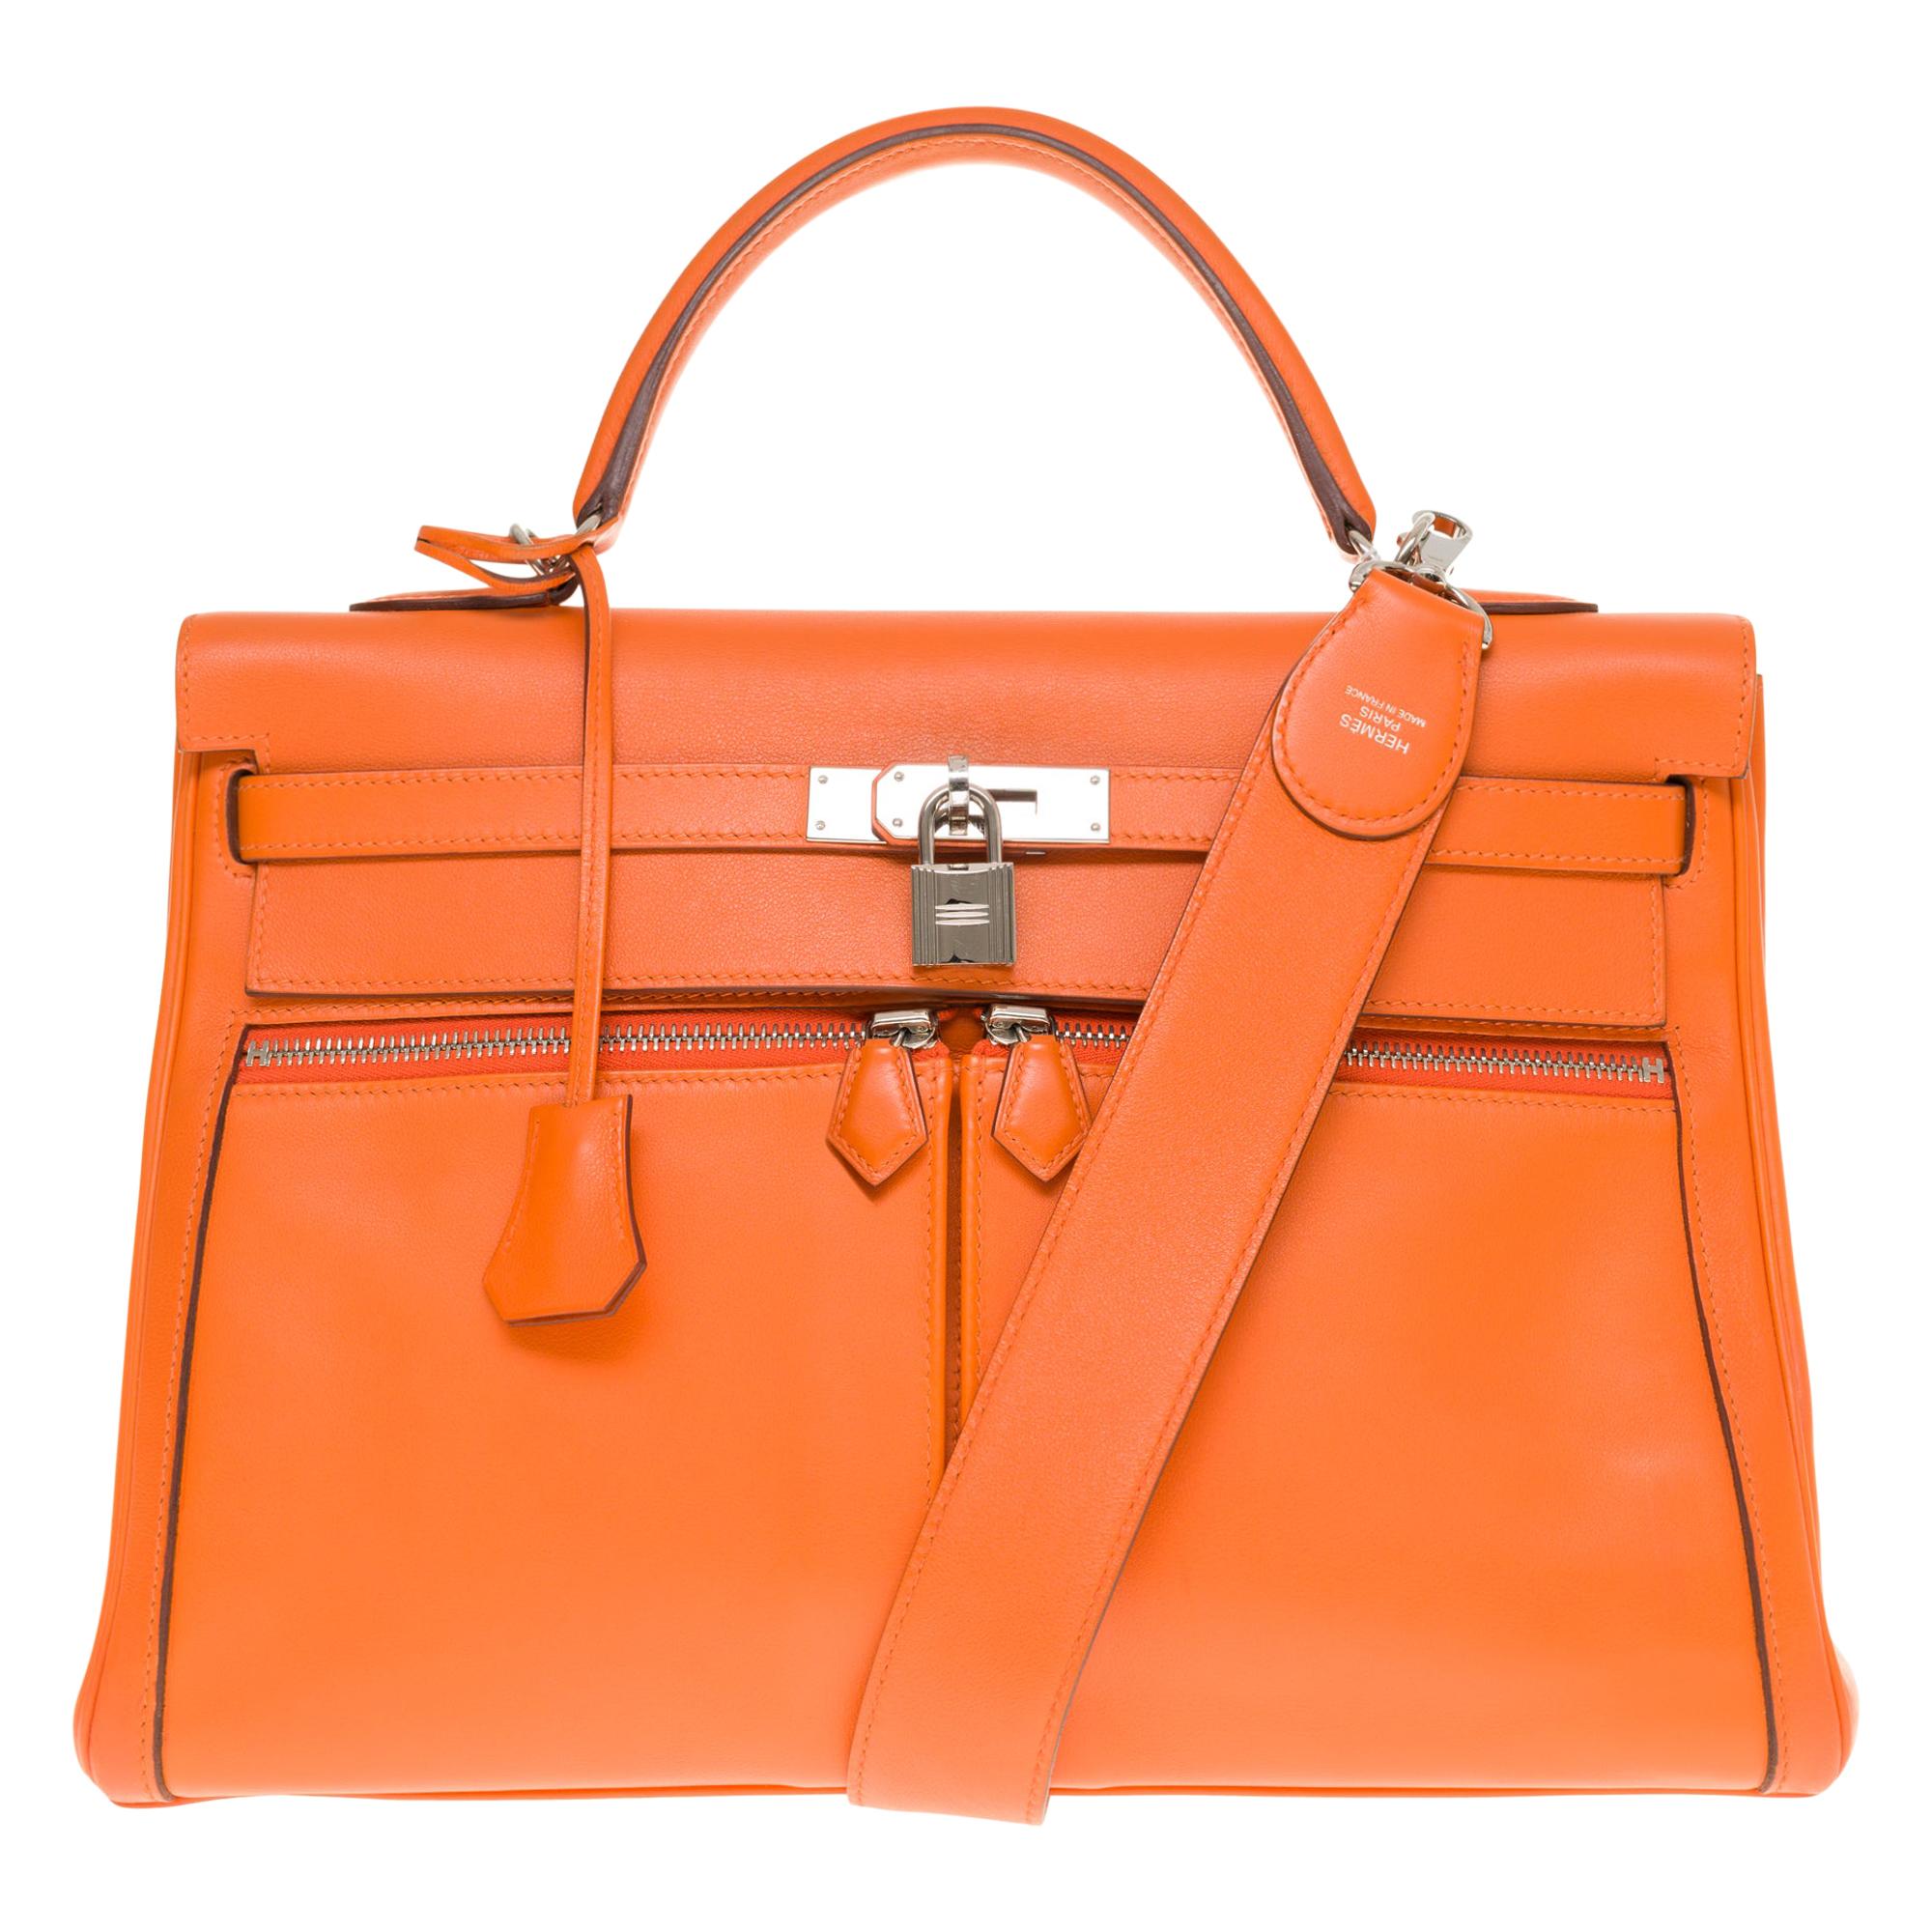 Rare Hermès Kelly Lakis 35 handbag with strap in orange swift calf leather, PHW